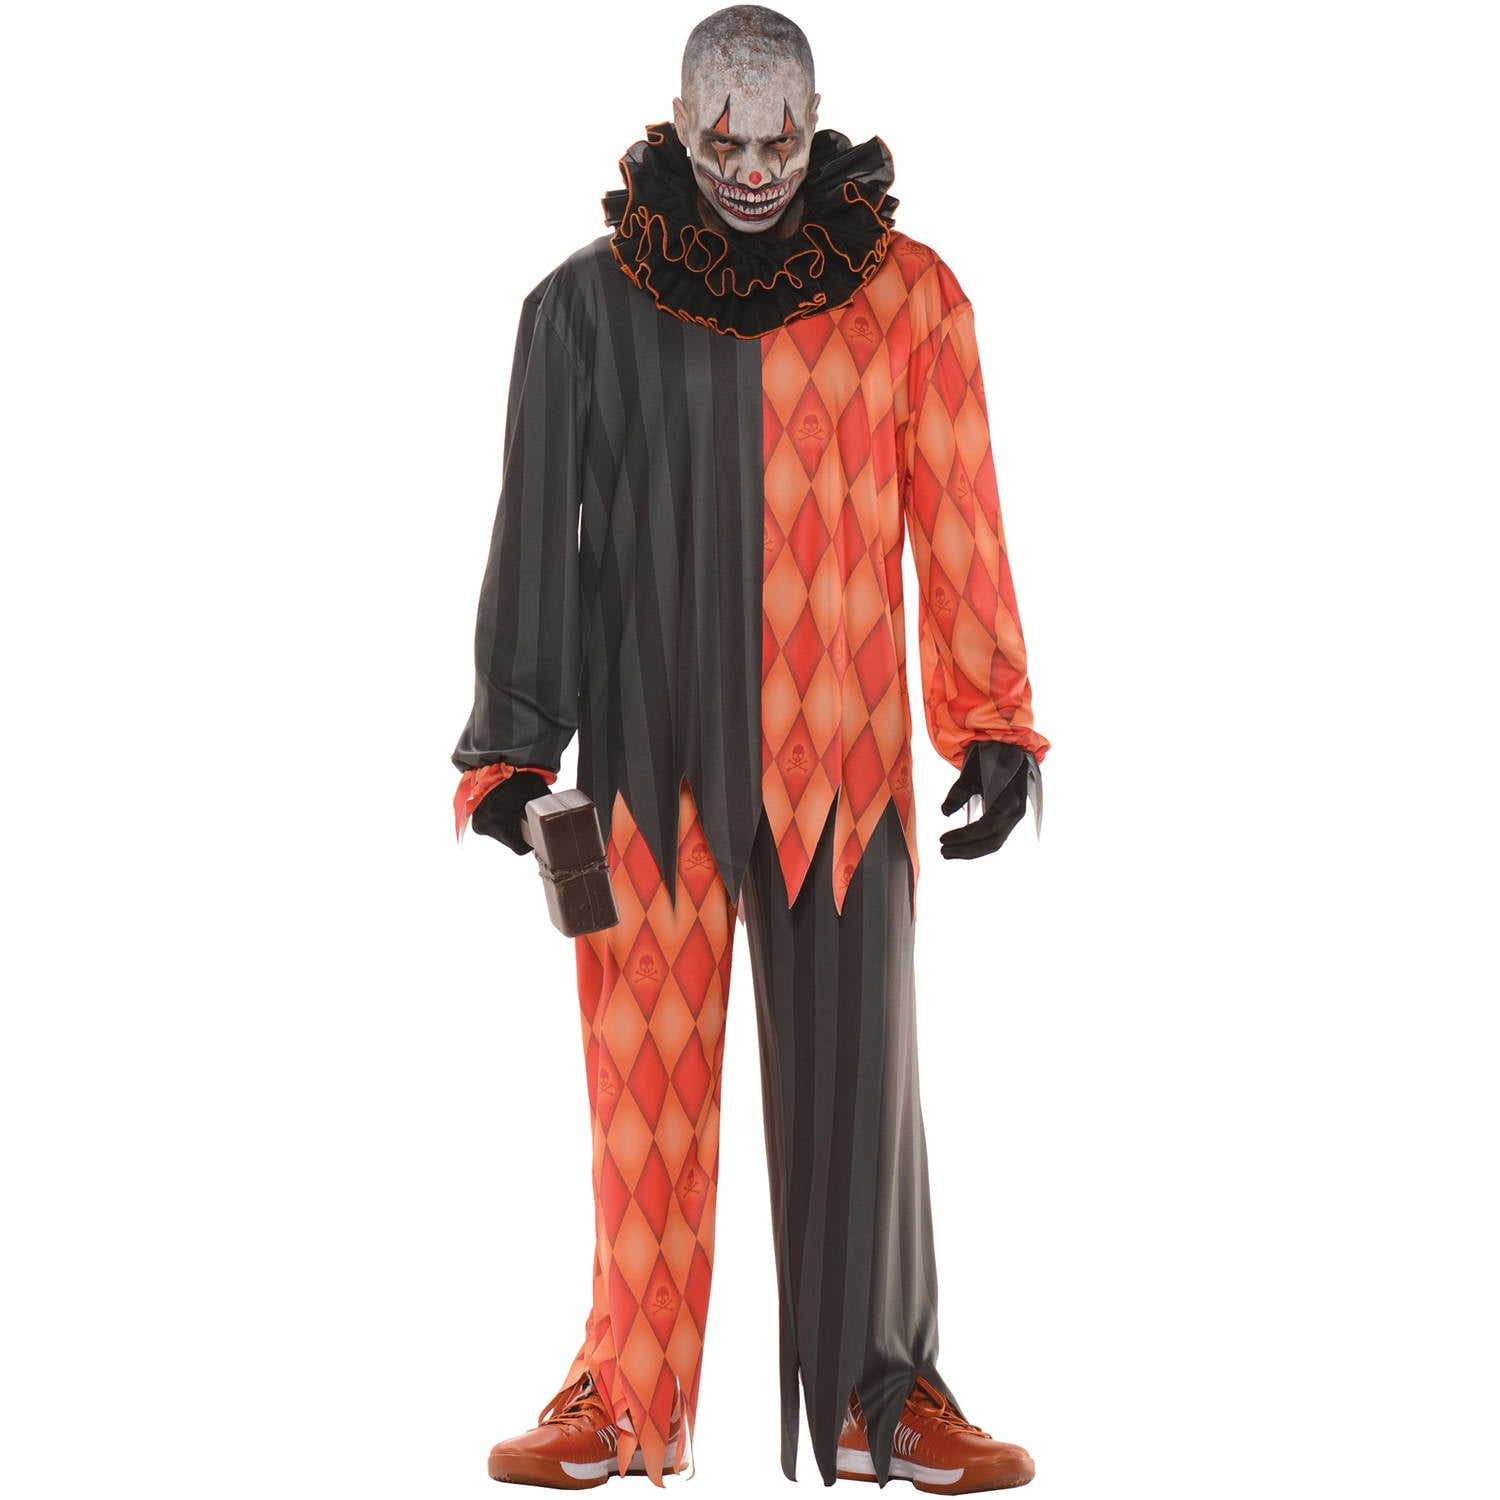 Jumbo Glasses Clown Fancy Dress Up Halloween Adult Costume Accessory 13 COLORS 